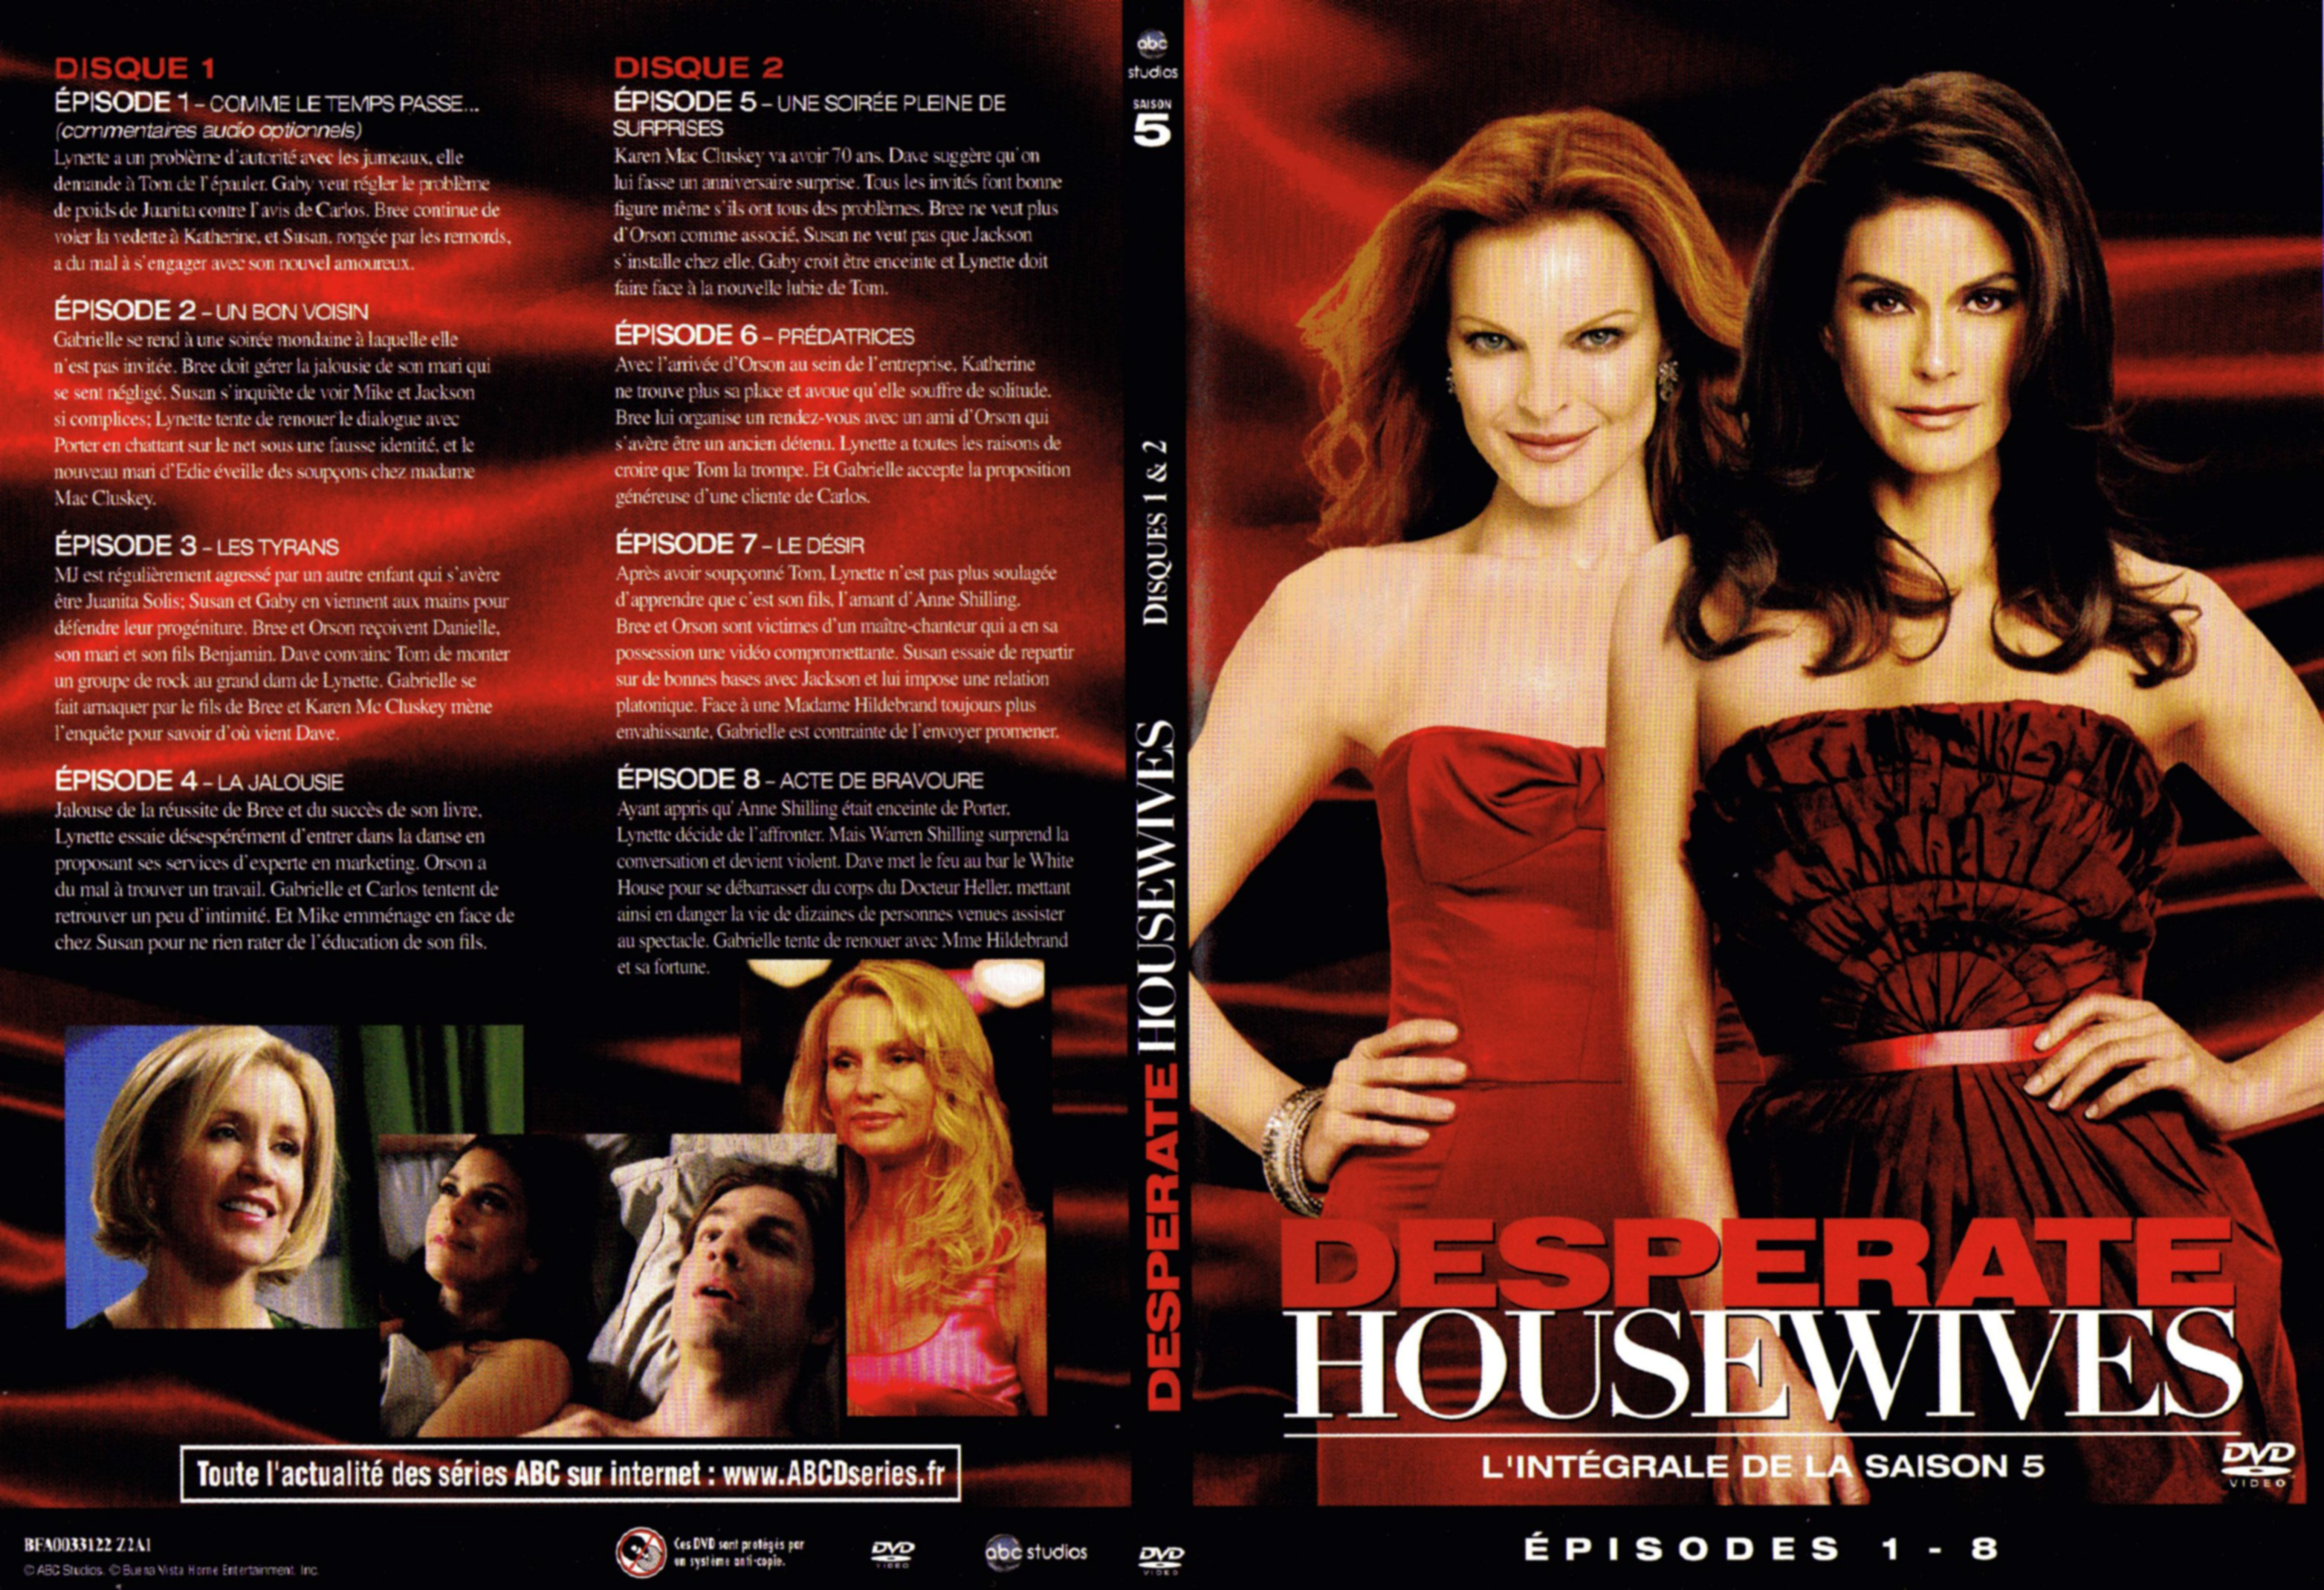 Jaquette DVD Desperate housewives Saison 5 DVD 1